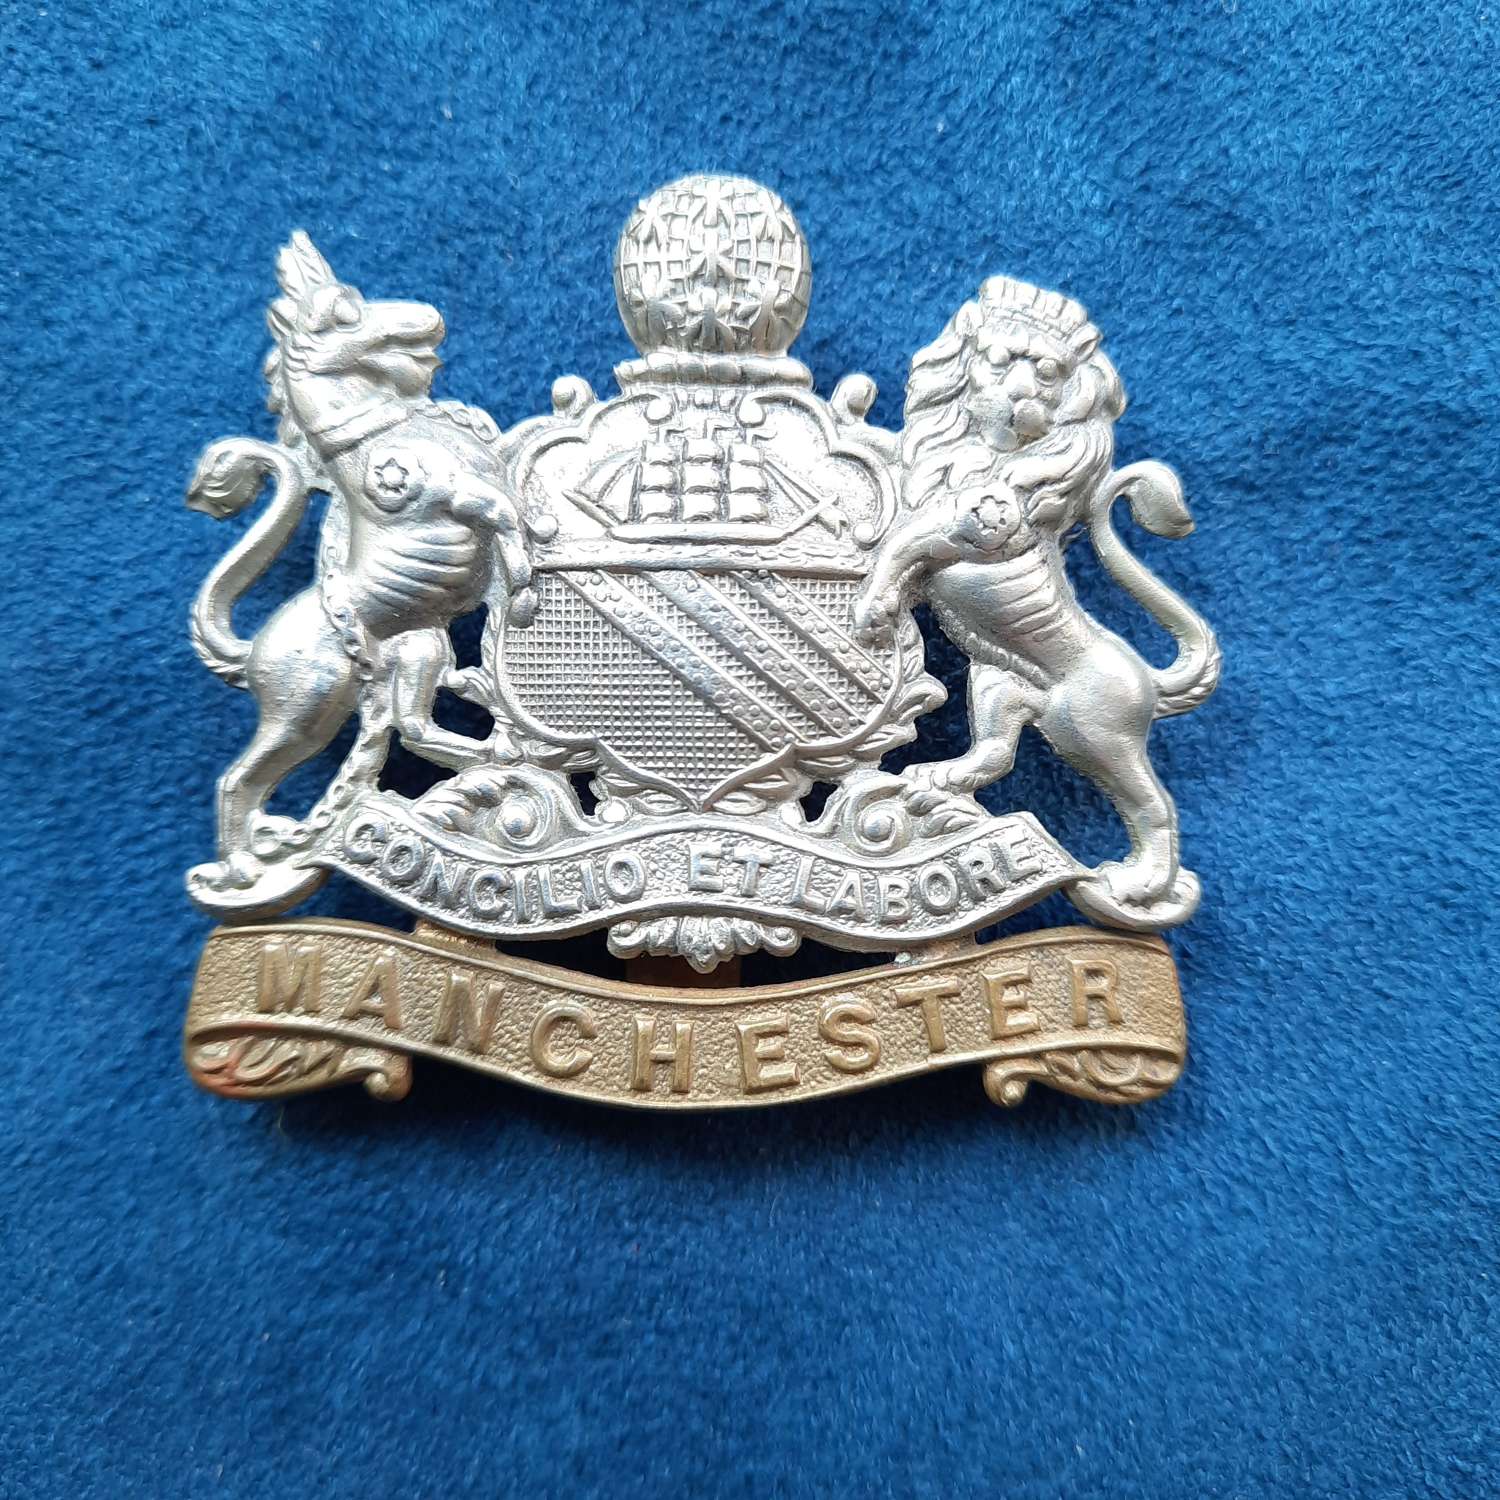 WW1 Manchester Regiment Cap Badge